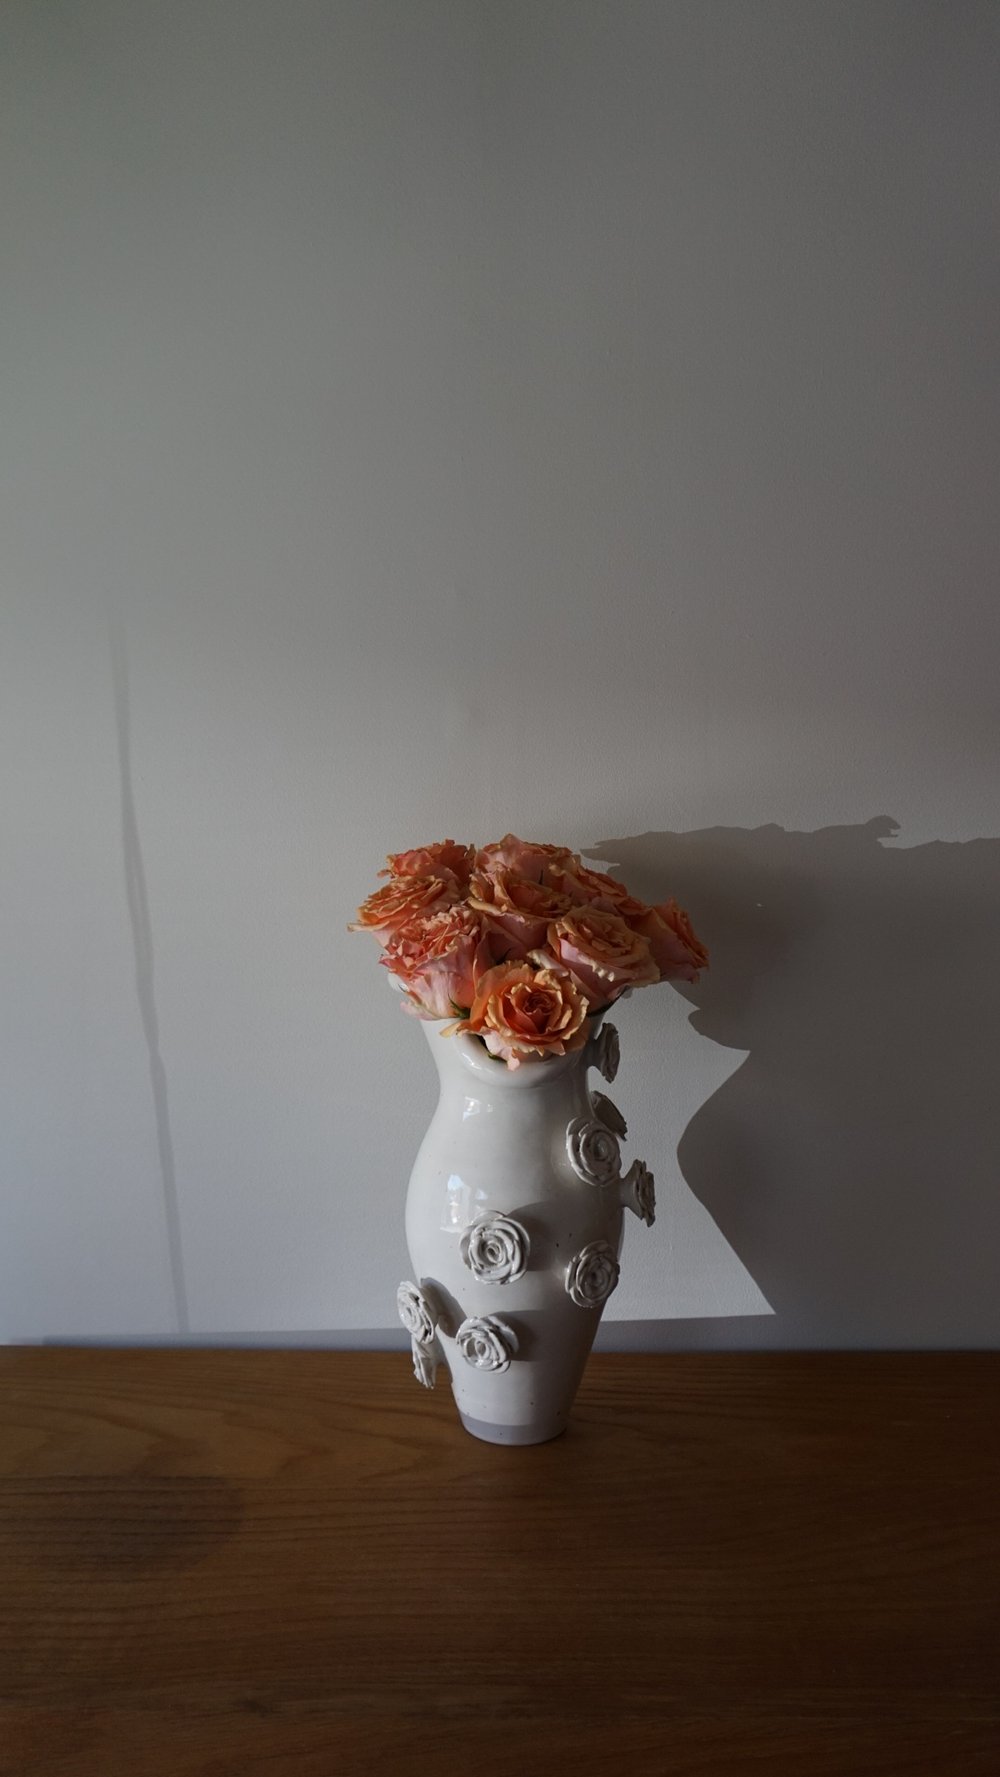 Image of "The white rose vase”